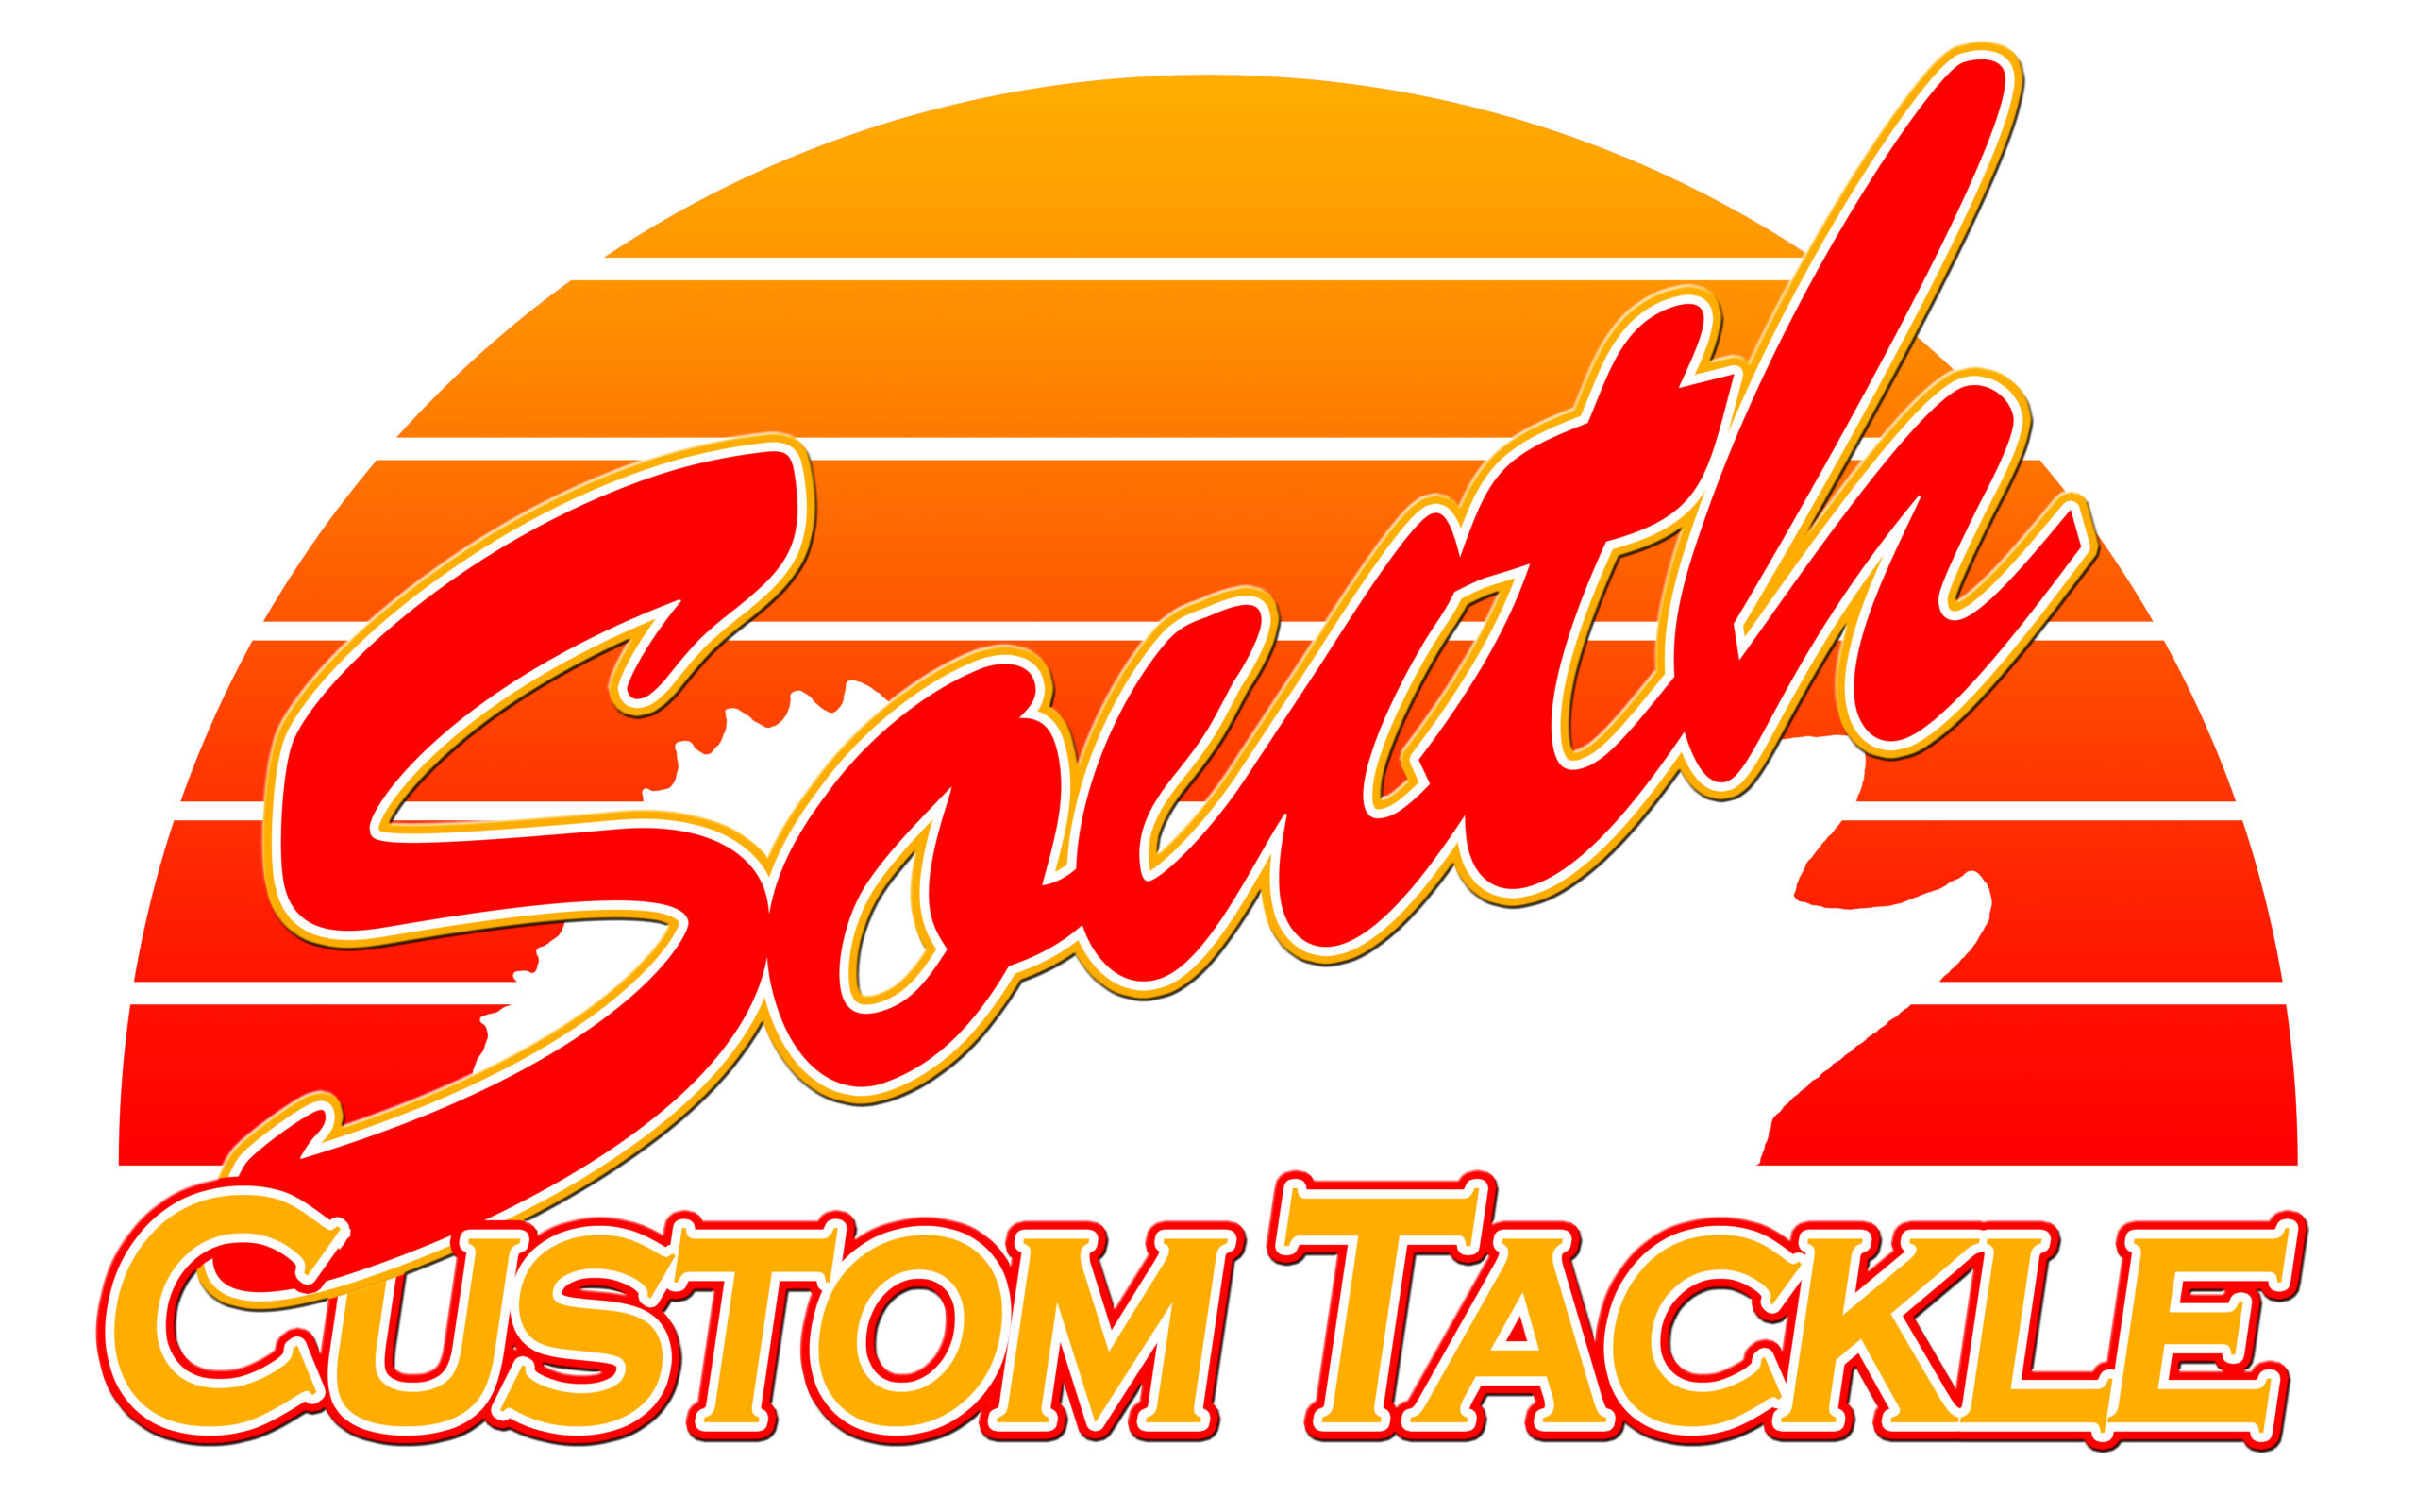 South Custom Tackle